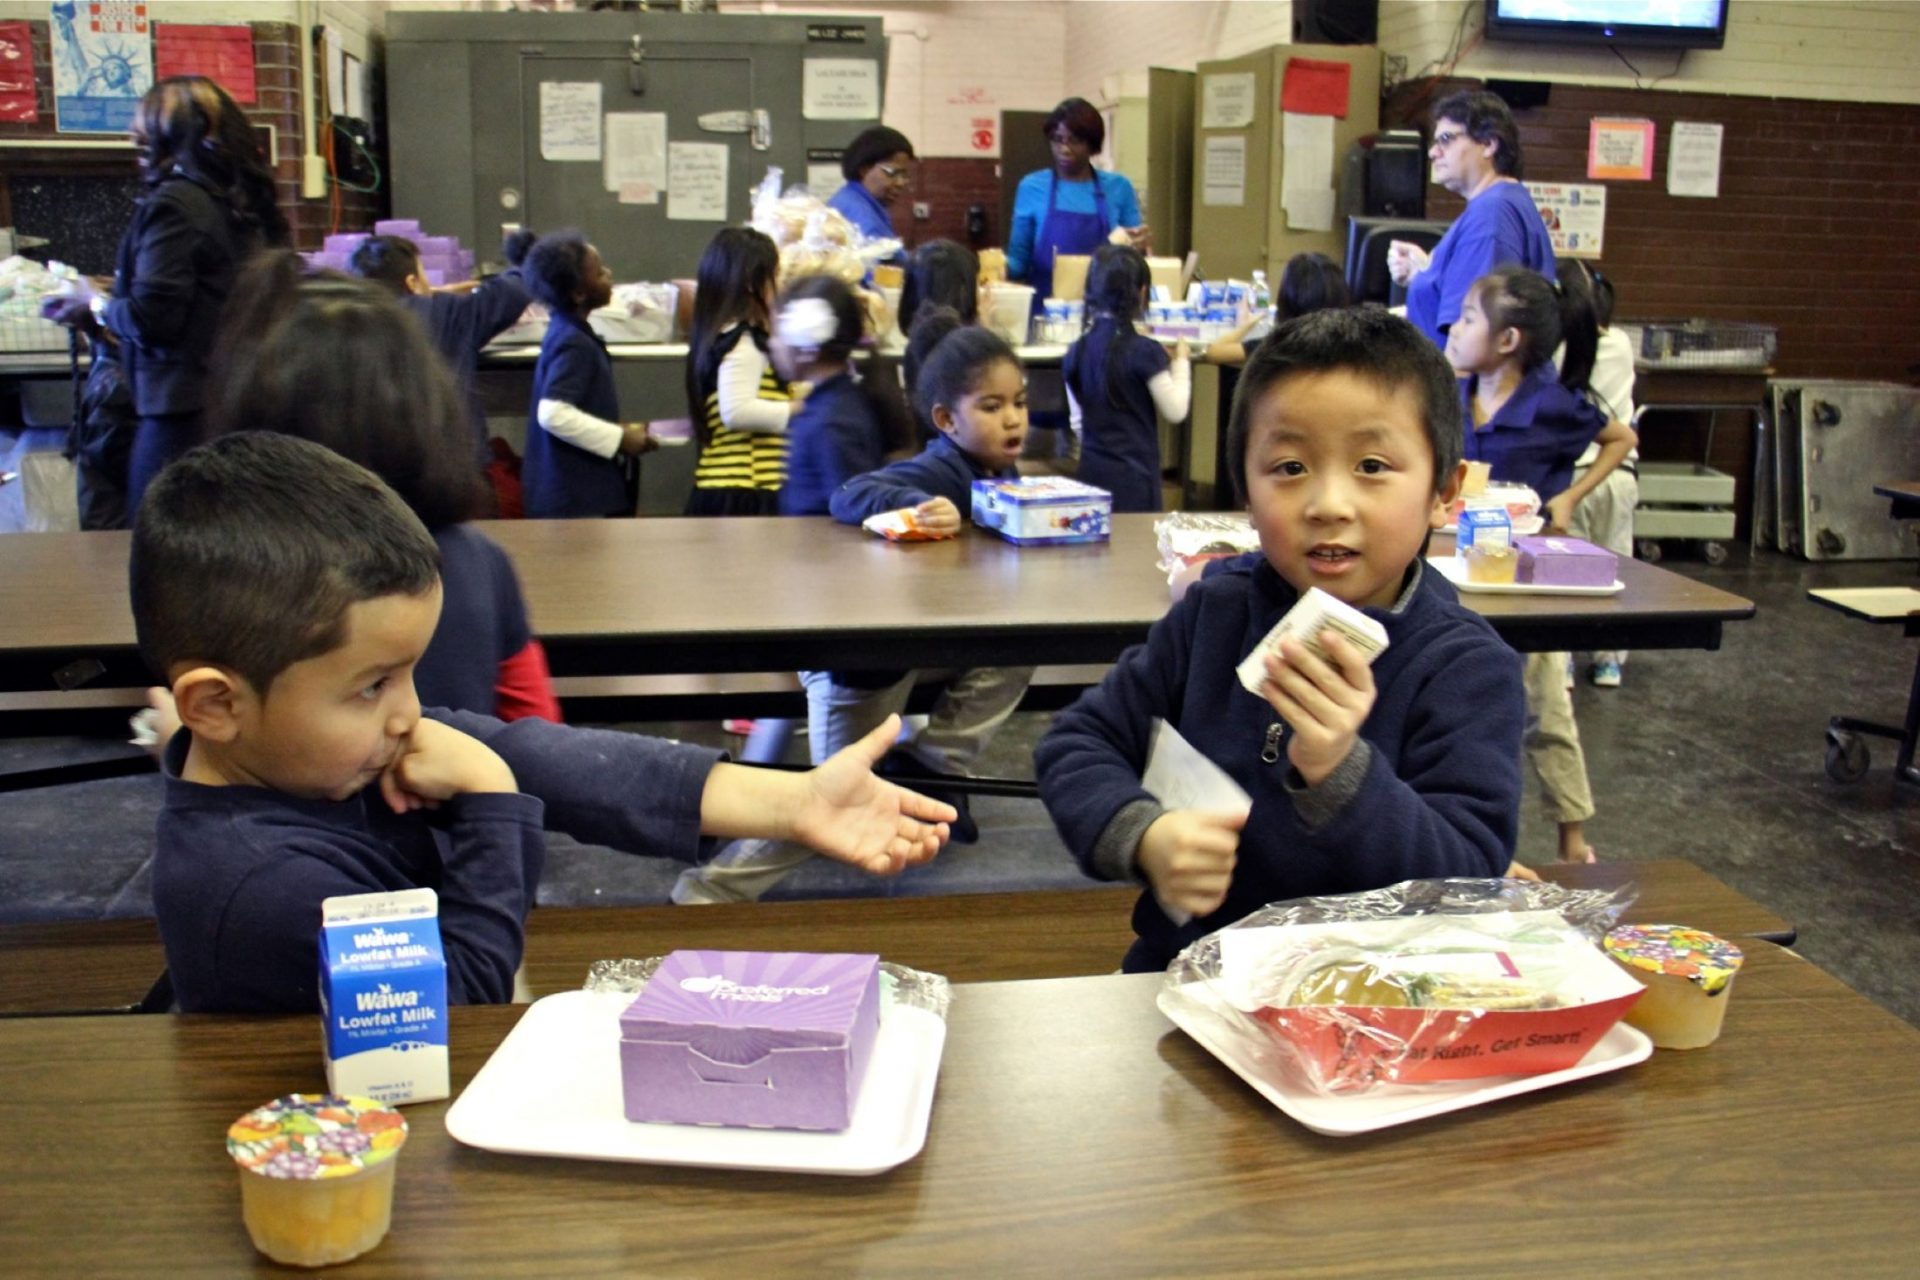 Children at Southwark School eat their school lunches from styrofoam trays, Dec. 20, 2016.